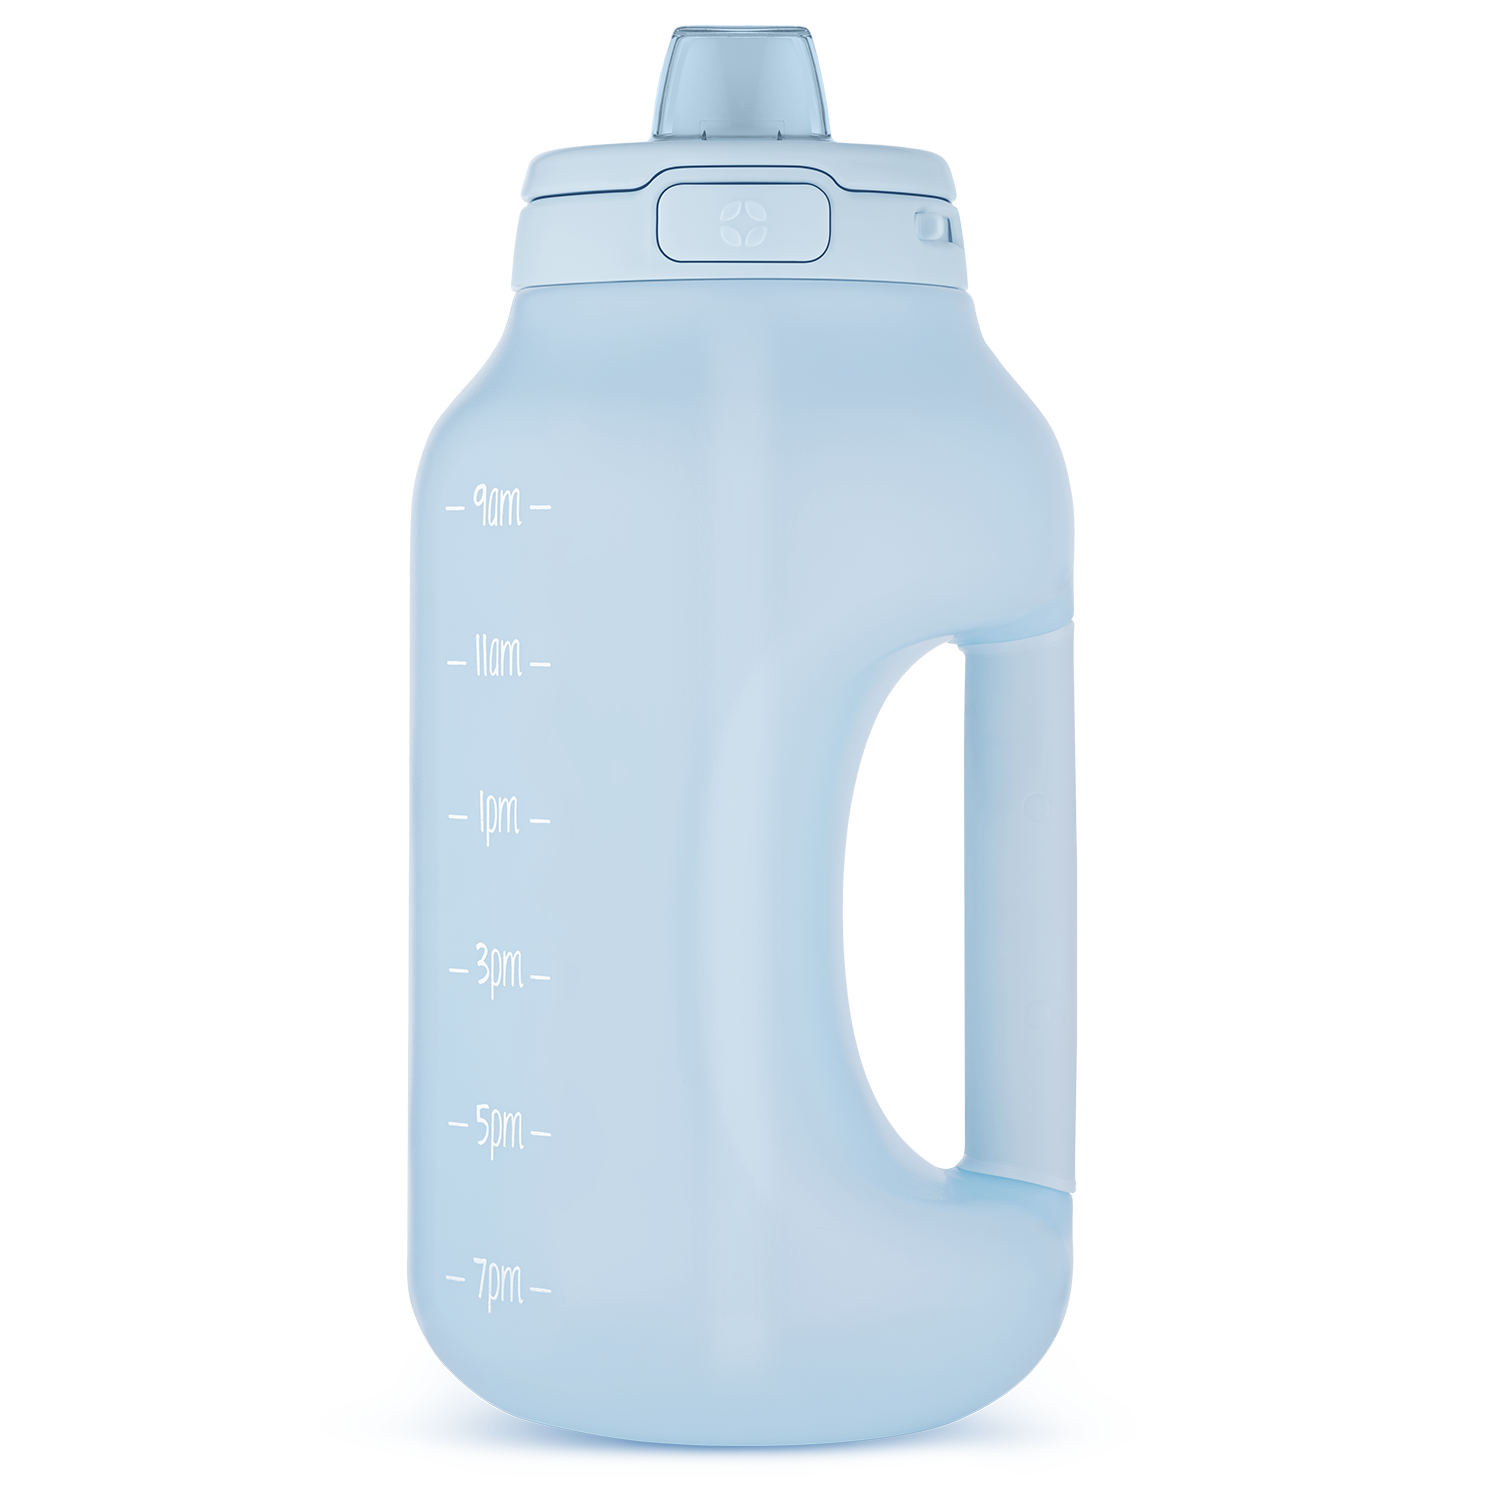 Reusable Straw for Half Gallon Water Bottle